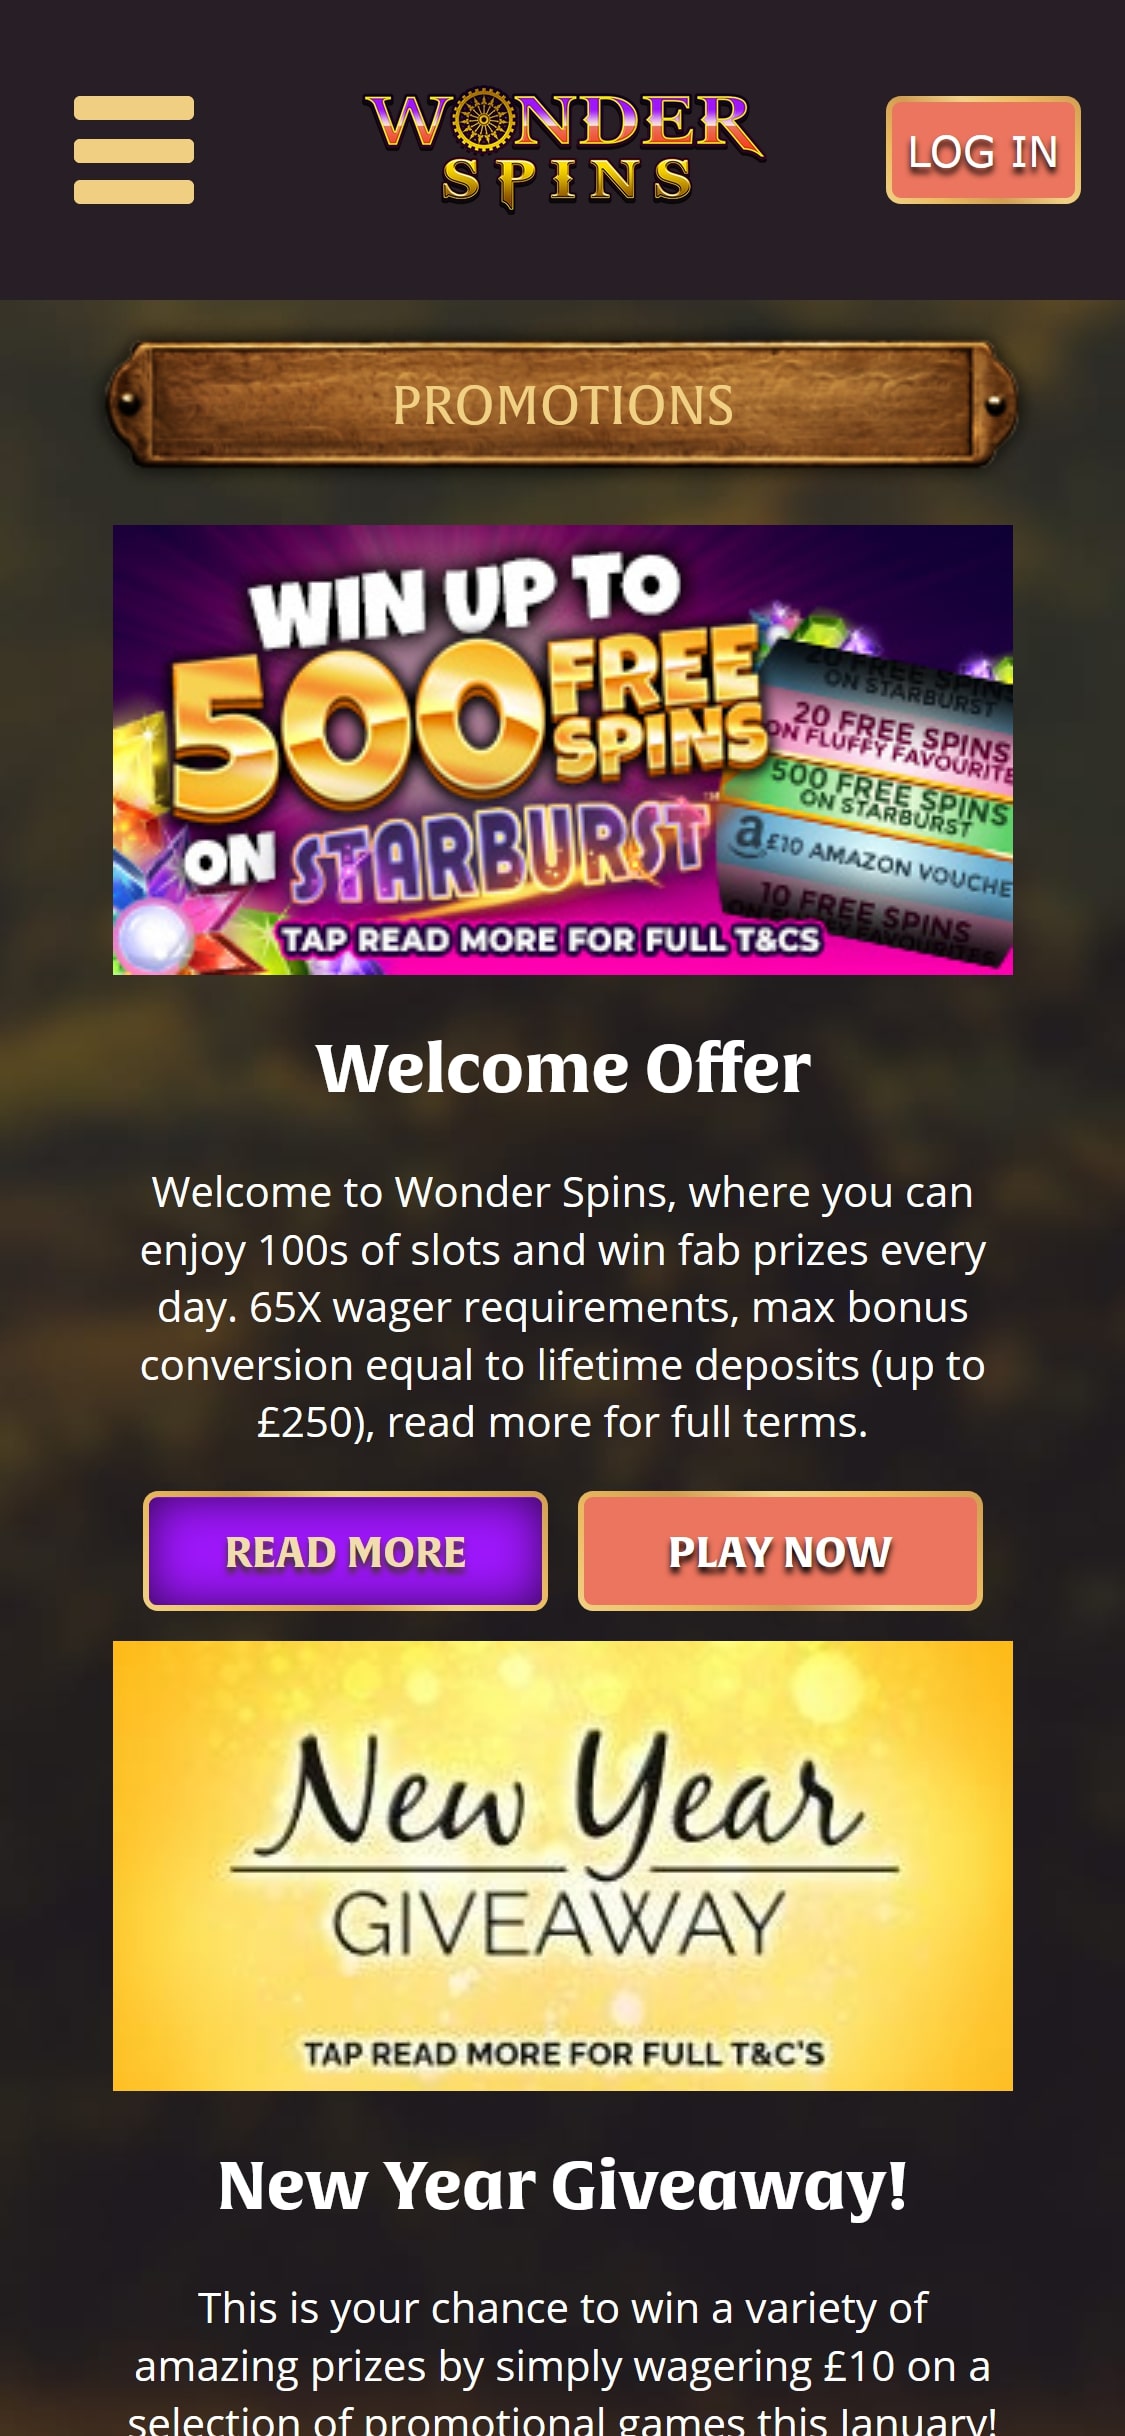 Wonder Spins Casino Mobile No Deposit Bonus Review